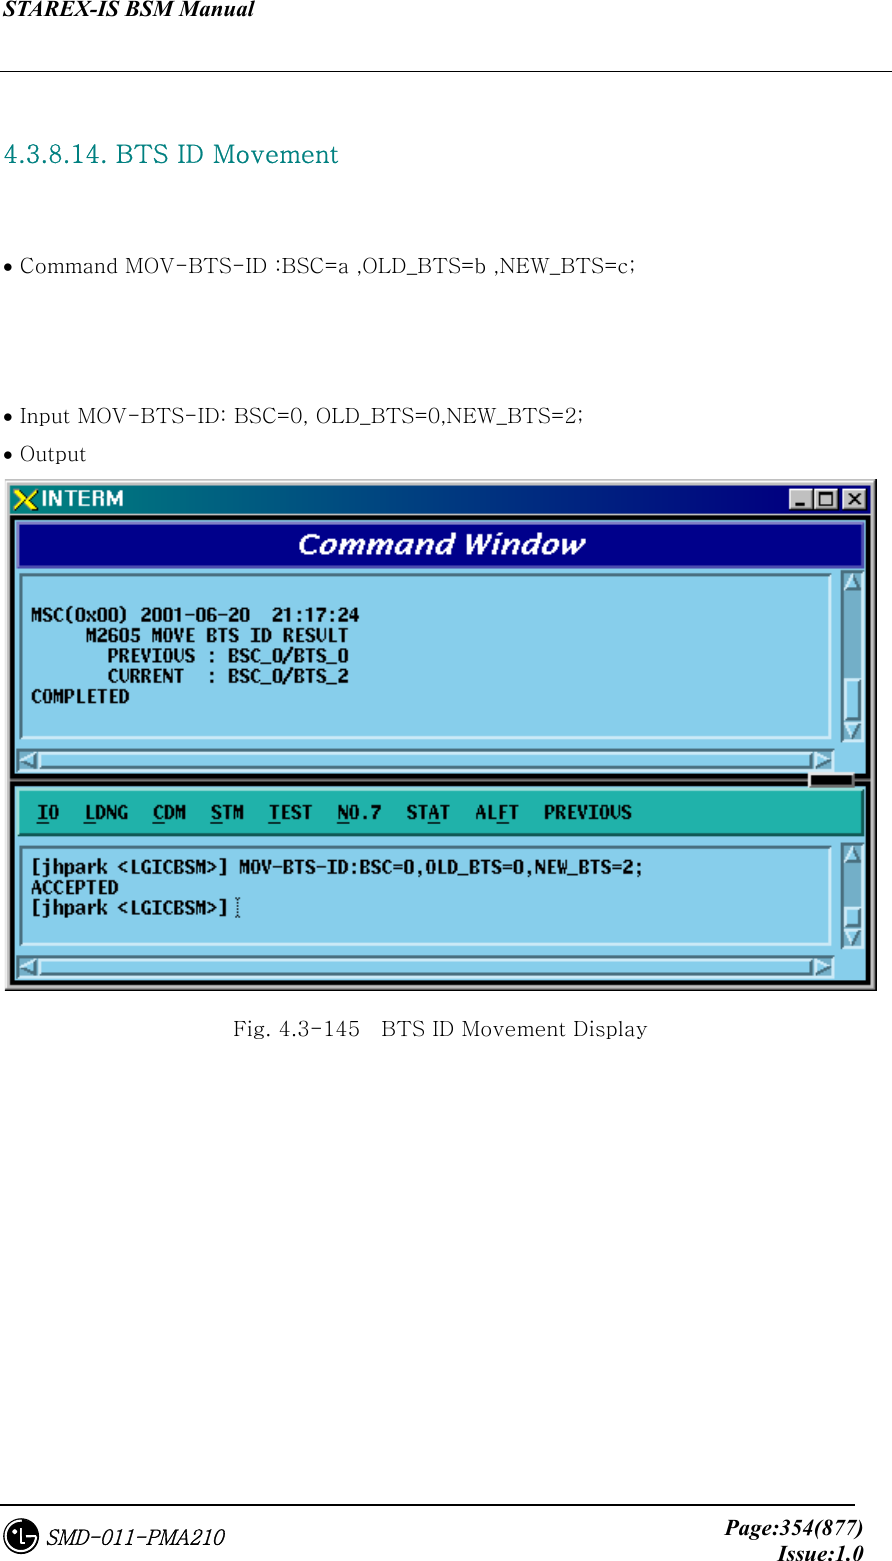 STAREX-IS BSM Manual     Page:354(877)Issue:1.0SMD-011-PMA210  4.3.8.14. BTS ID Movement    • Command MOV-BTS-ID :BSC=a ,OLD_BTS=b ,NEW_BTS=c;    • Input MOV-BTS-ID: BSC=0, OLD_BTS=0,NEW_BTS=2; • Output  Fig. 4.3-145    BTS ID Movement Display 